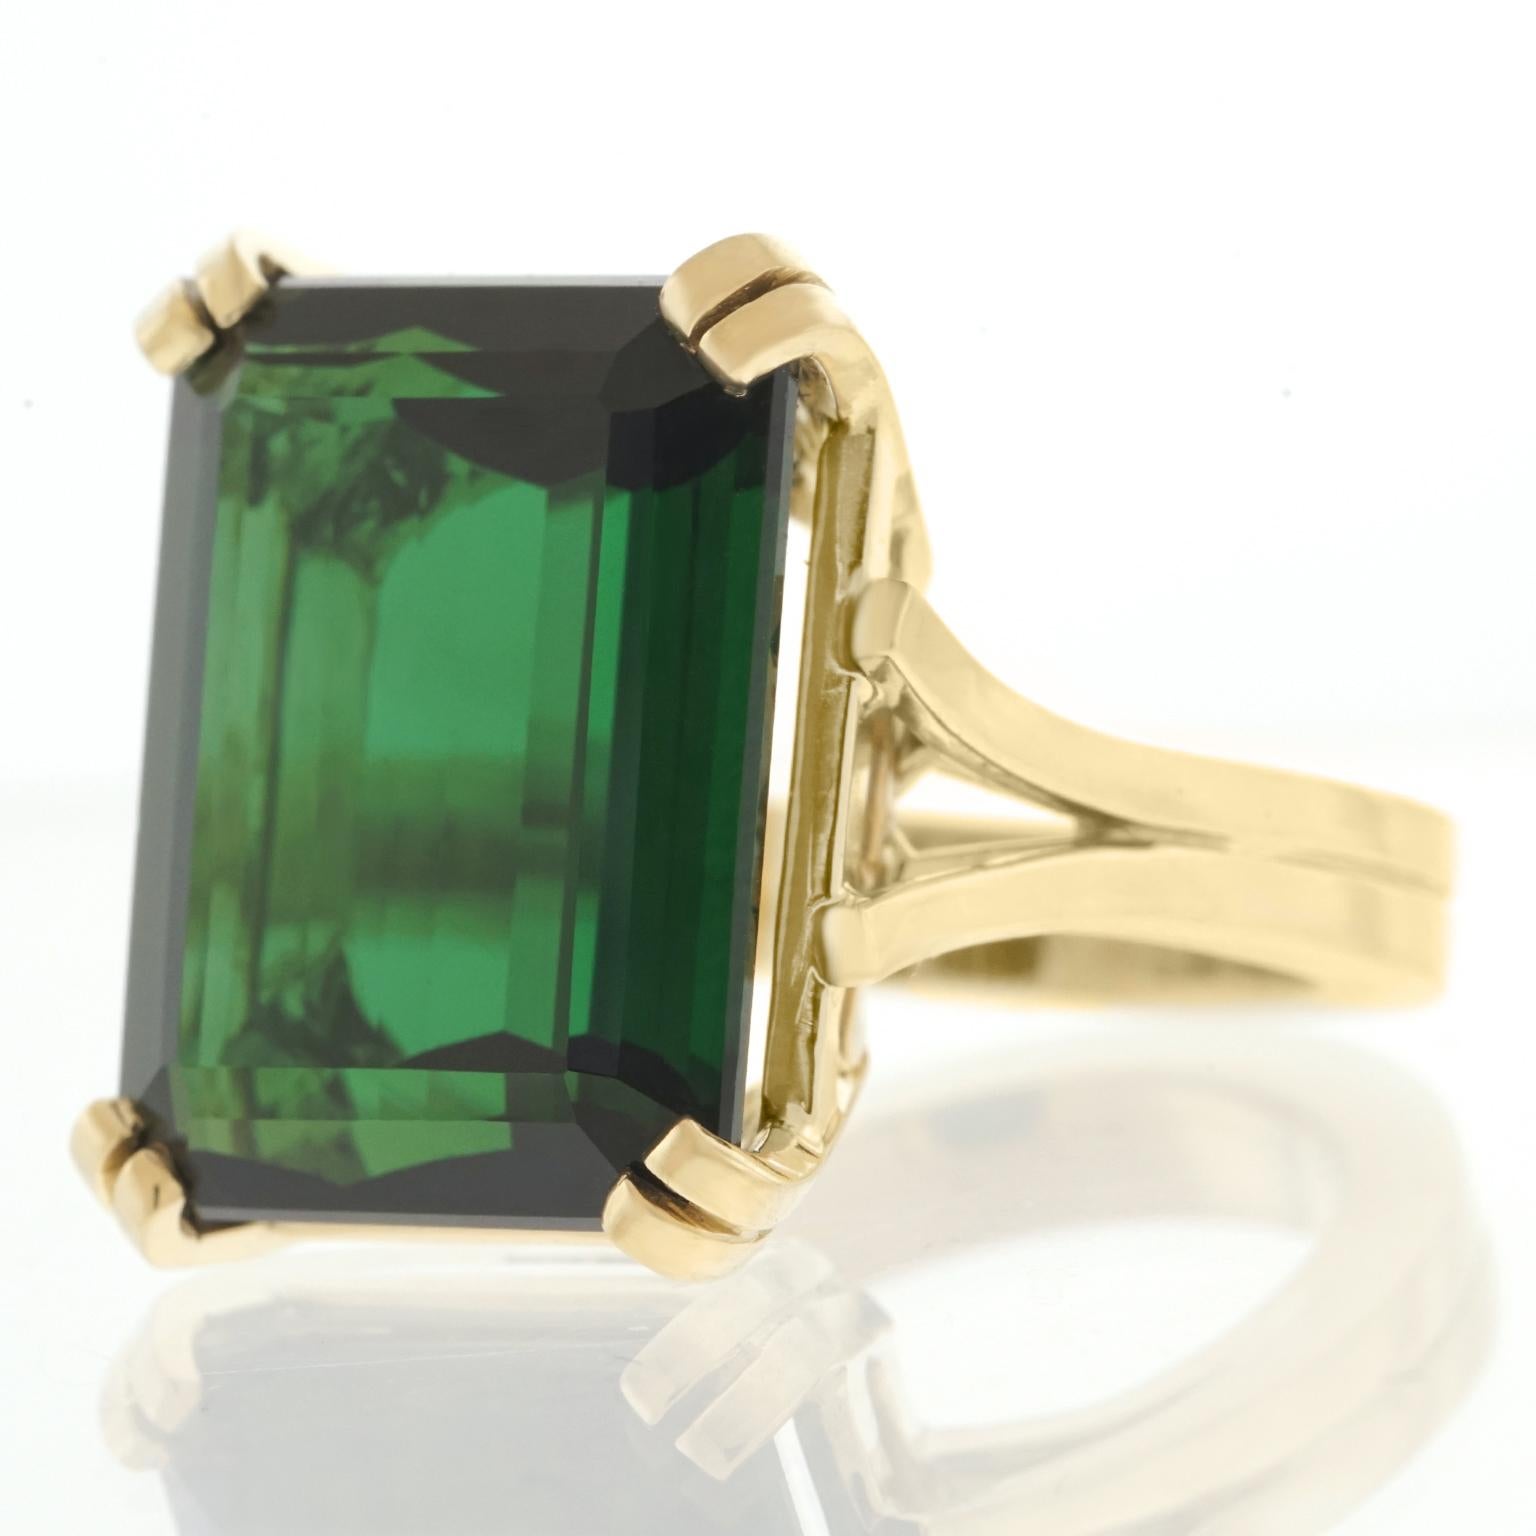 Emerald Cut Lawrence Jeffrey 28.3 Carat Tourmaline Ring in Gold